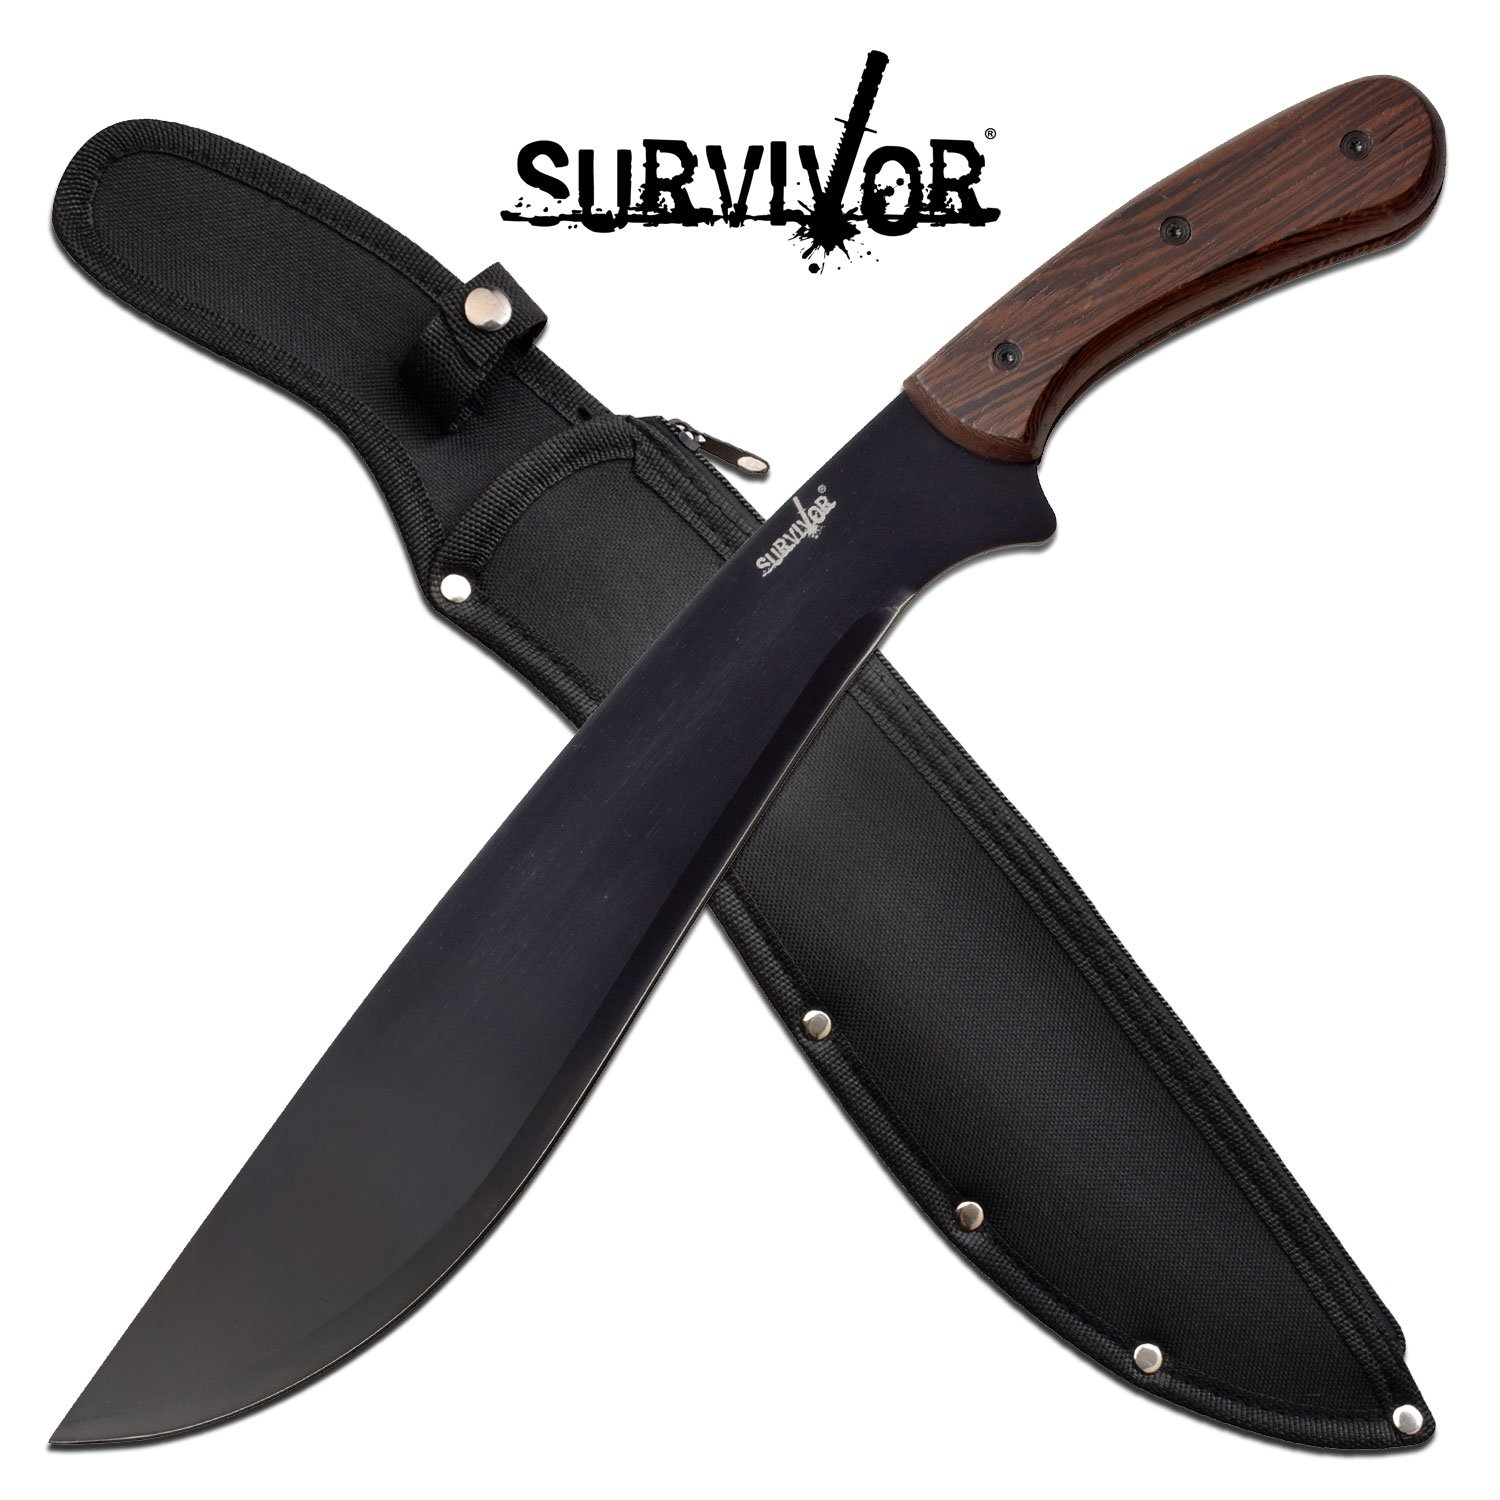 Survivor 22 Inch Machete Survival Knife with Wood Handle and - South Dakota - Aberdeen ID1556602